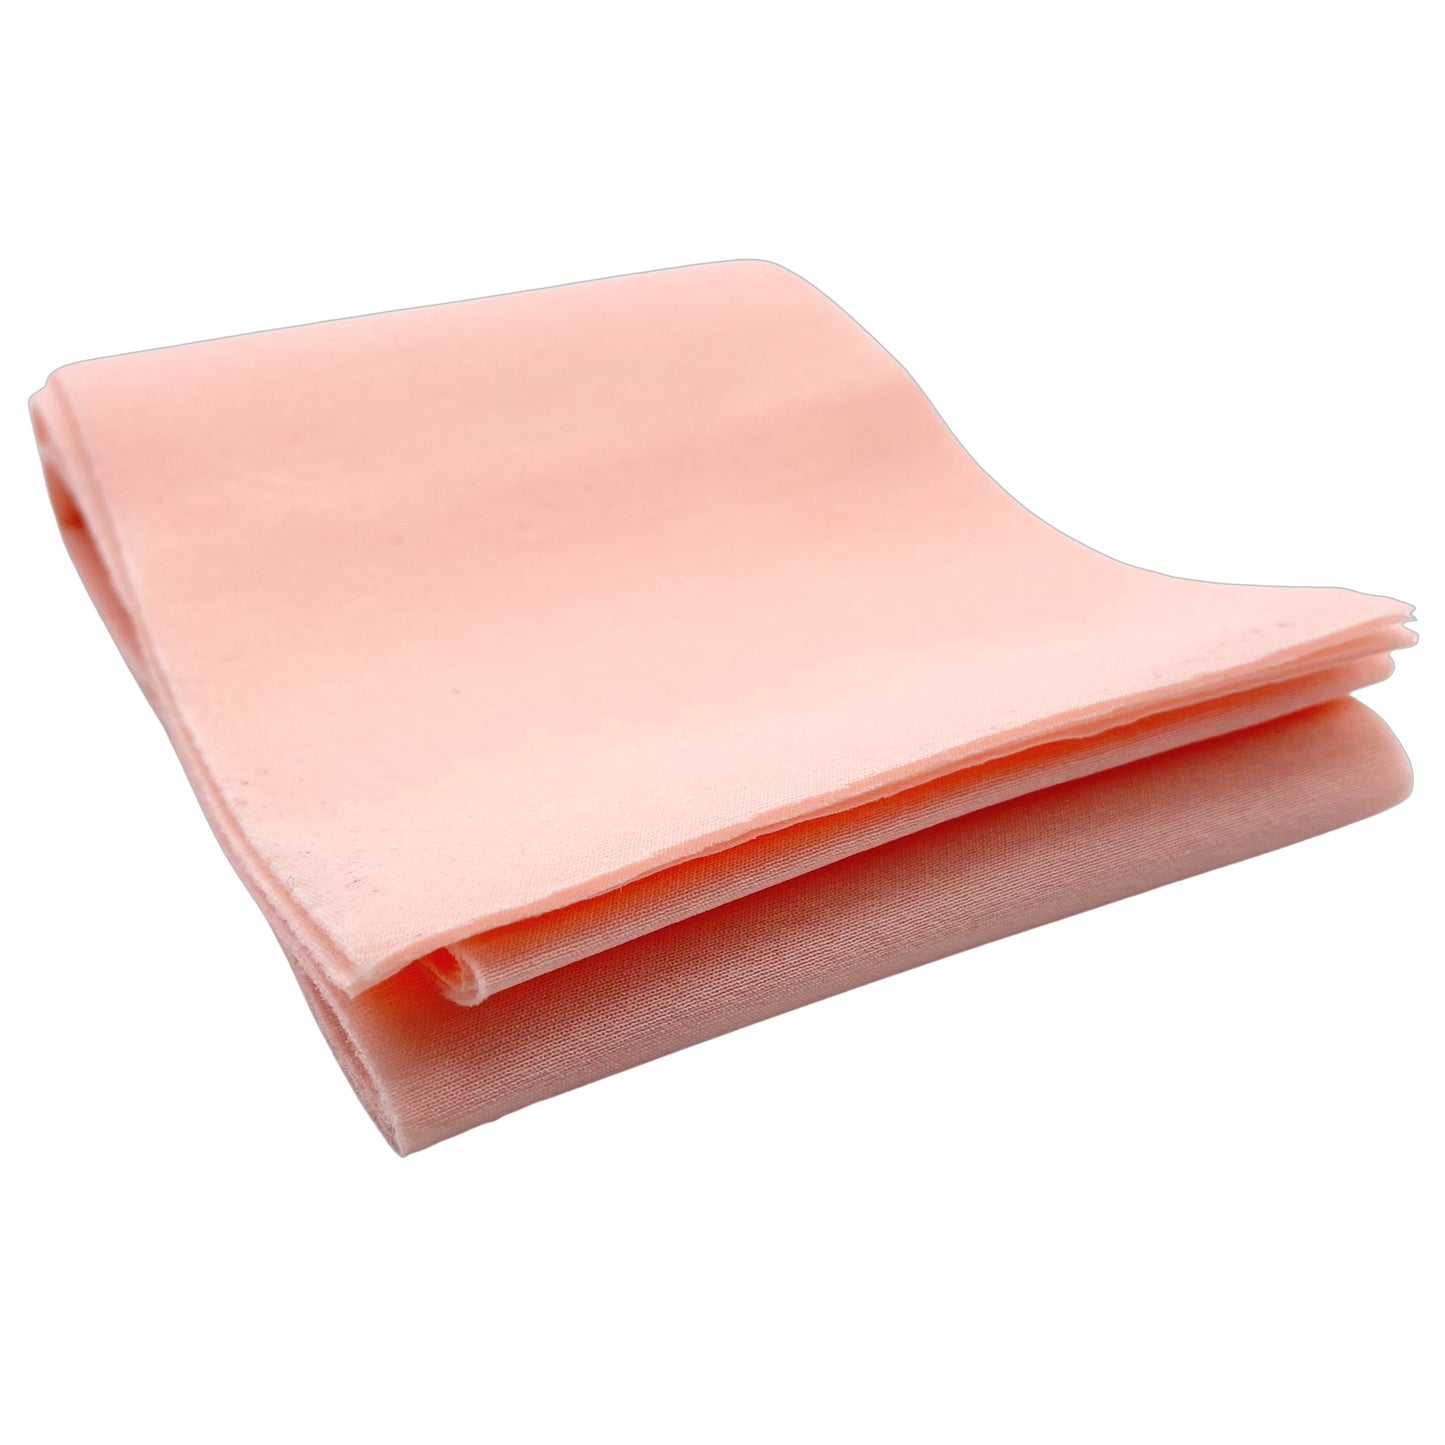 Folded neoprene fabric strip in ballerina baby pink.